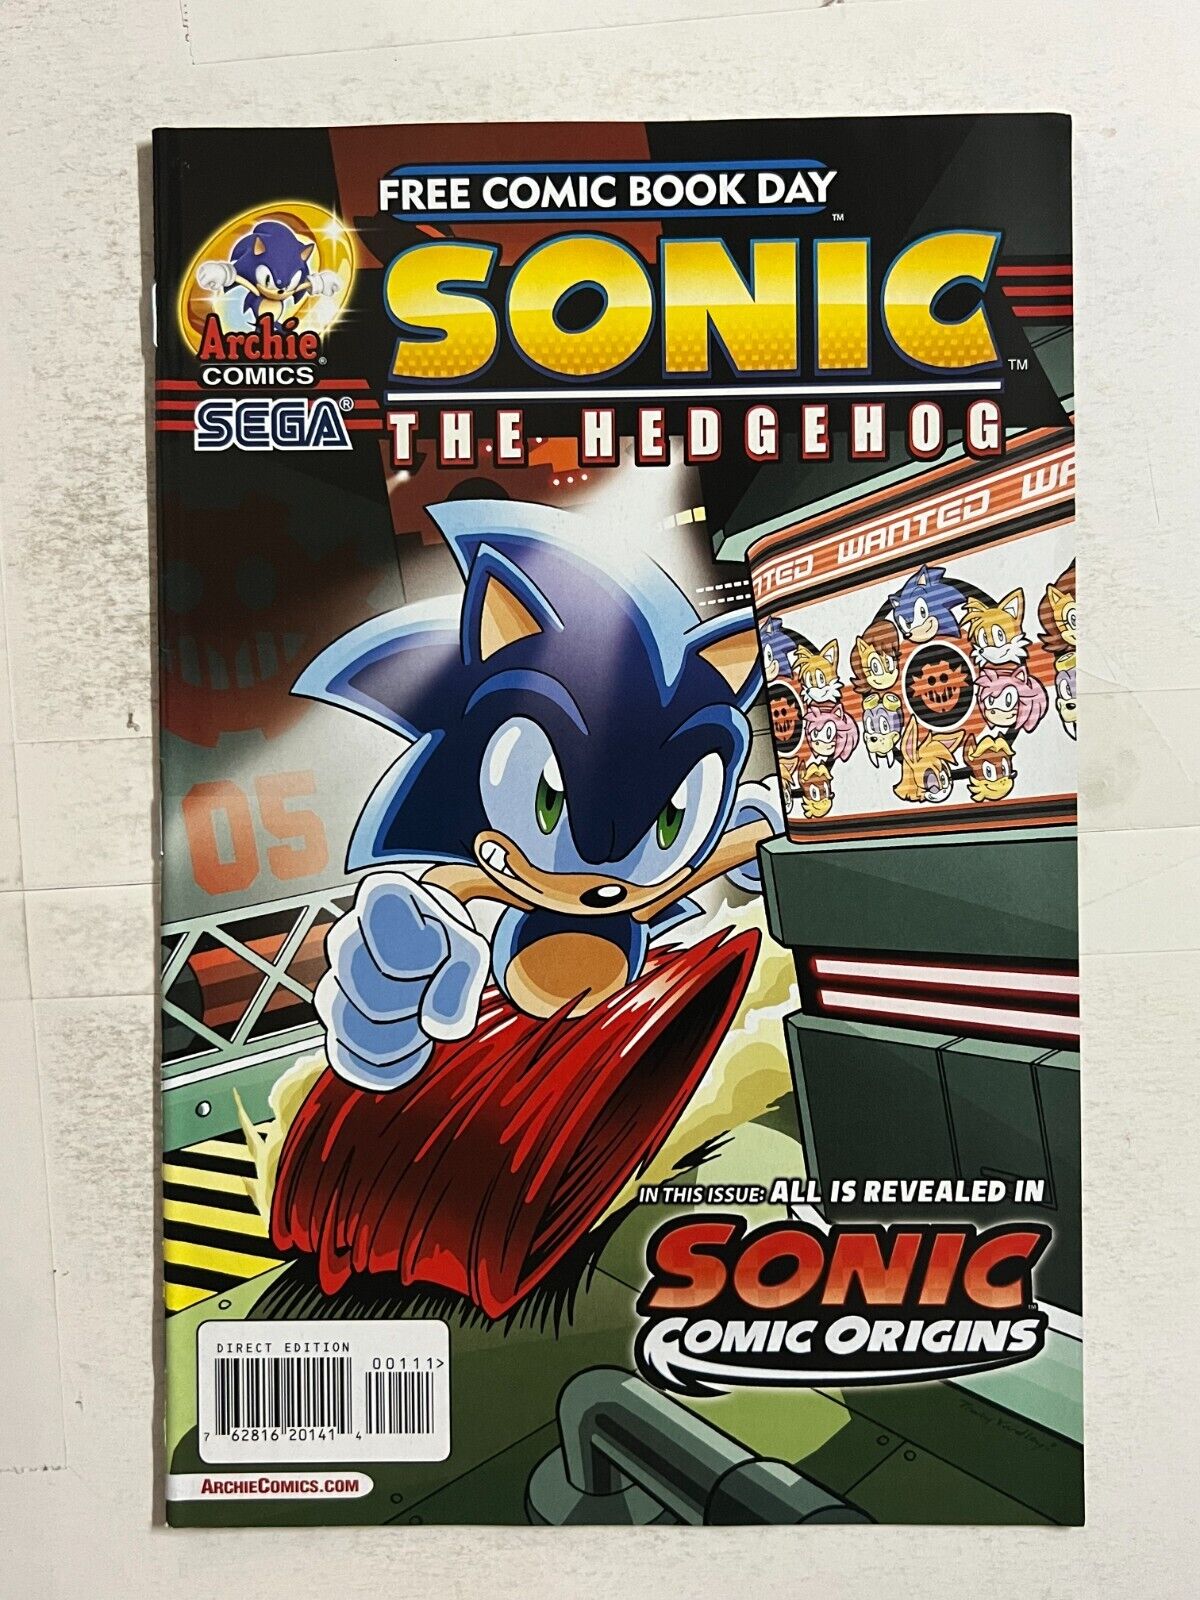 SONIC The Hedgehog ORIGINS & Mega Man FACTOR X FREE COMIC BOOK DAY 2014 | Combin